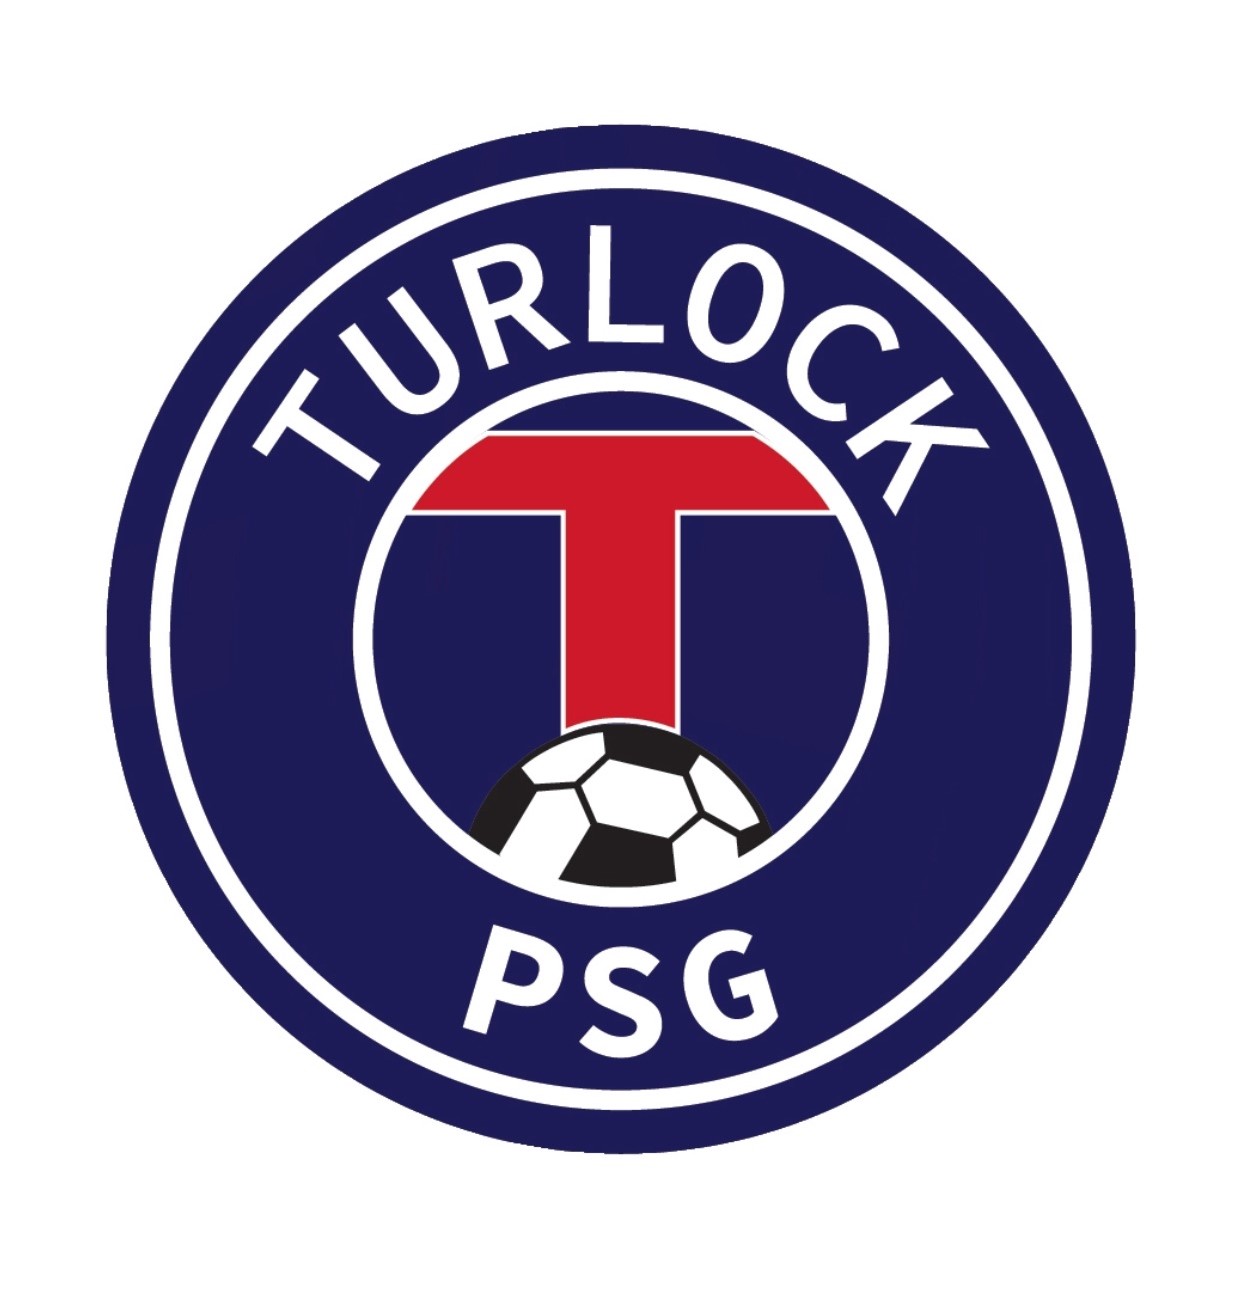 Turlock PSG team badge